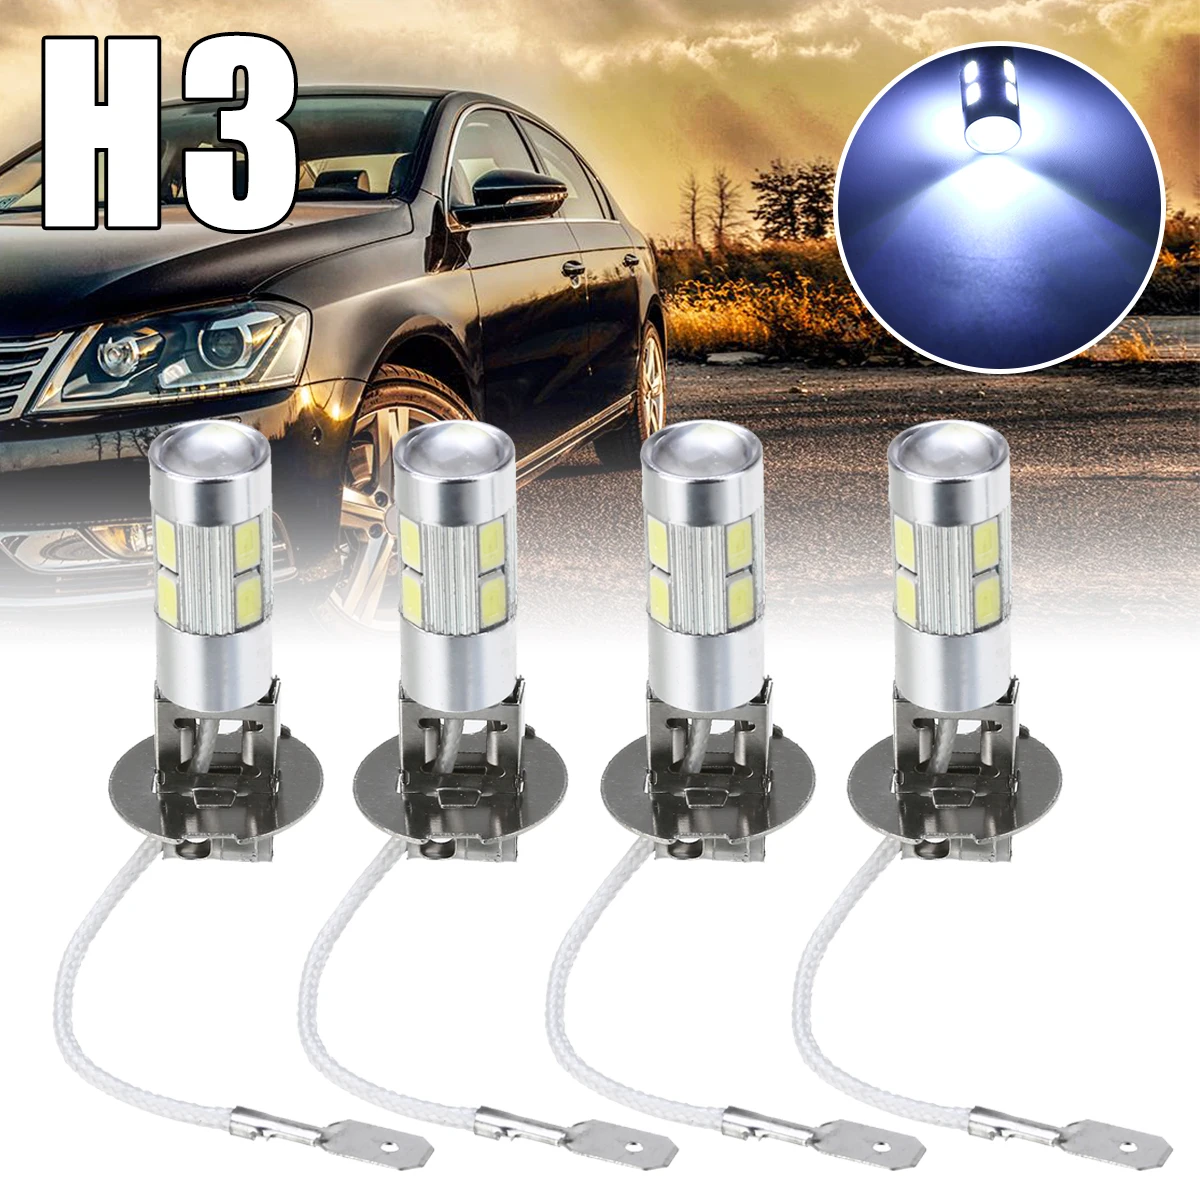 4pcs H3 Fog Light 5630 10SMD LED 12V Car Fog Driving Light Lamp Bulb Super Bright White Car Styling